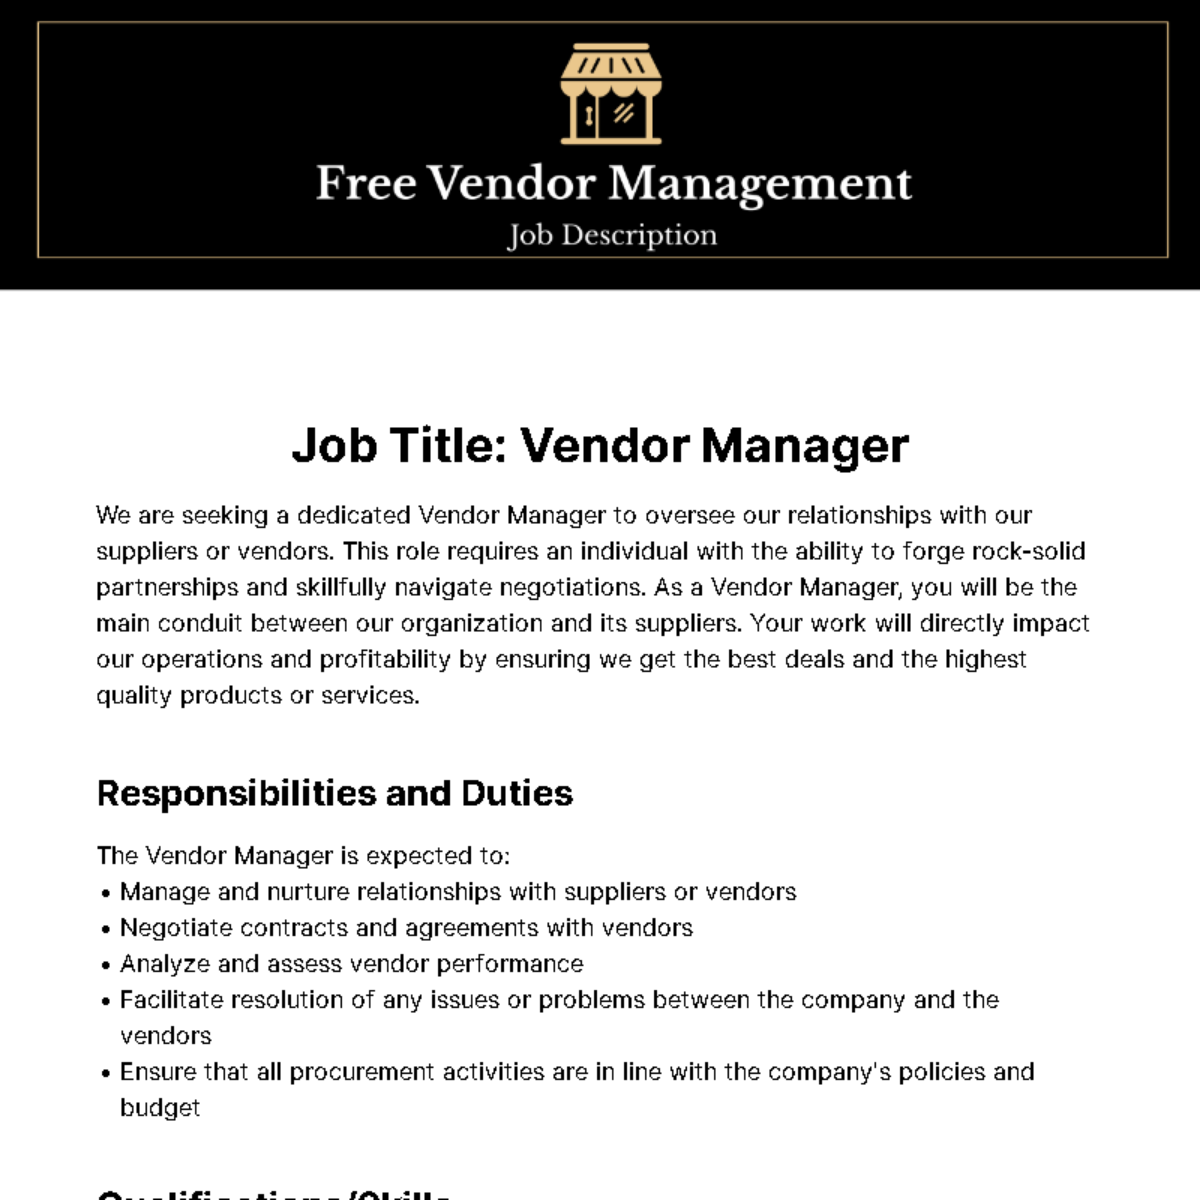 Free Vendor Management Job Description Template